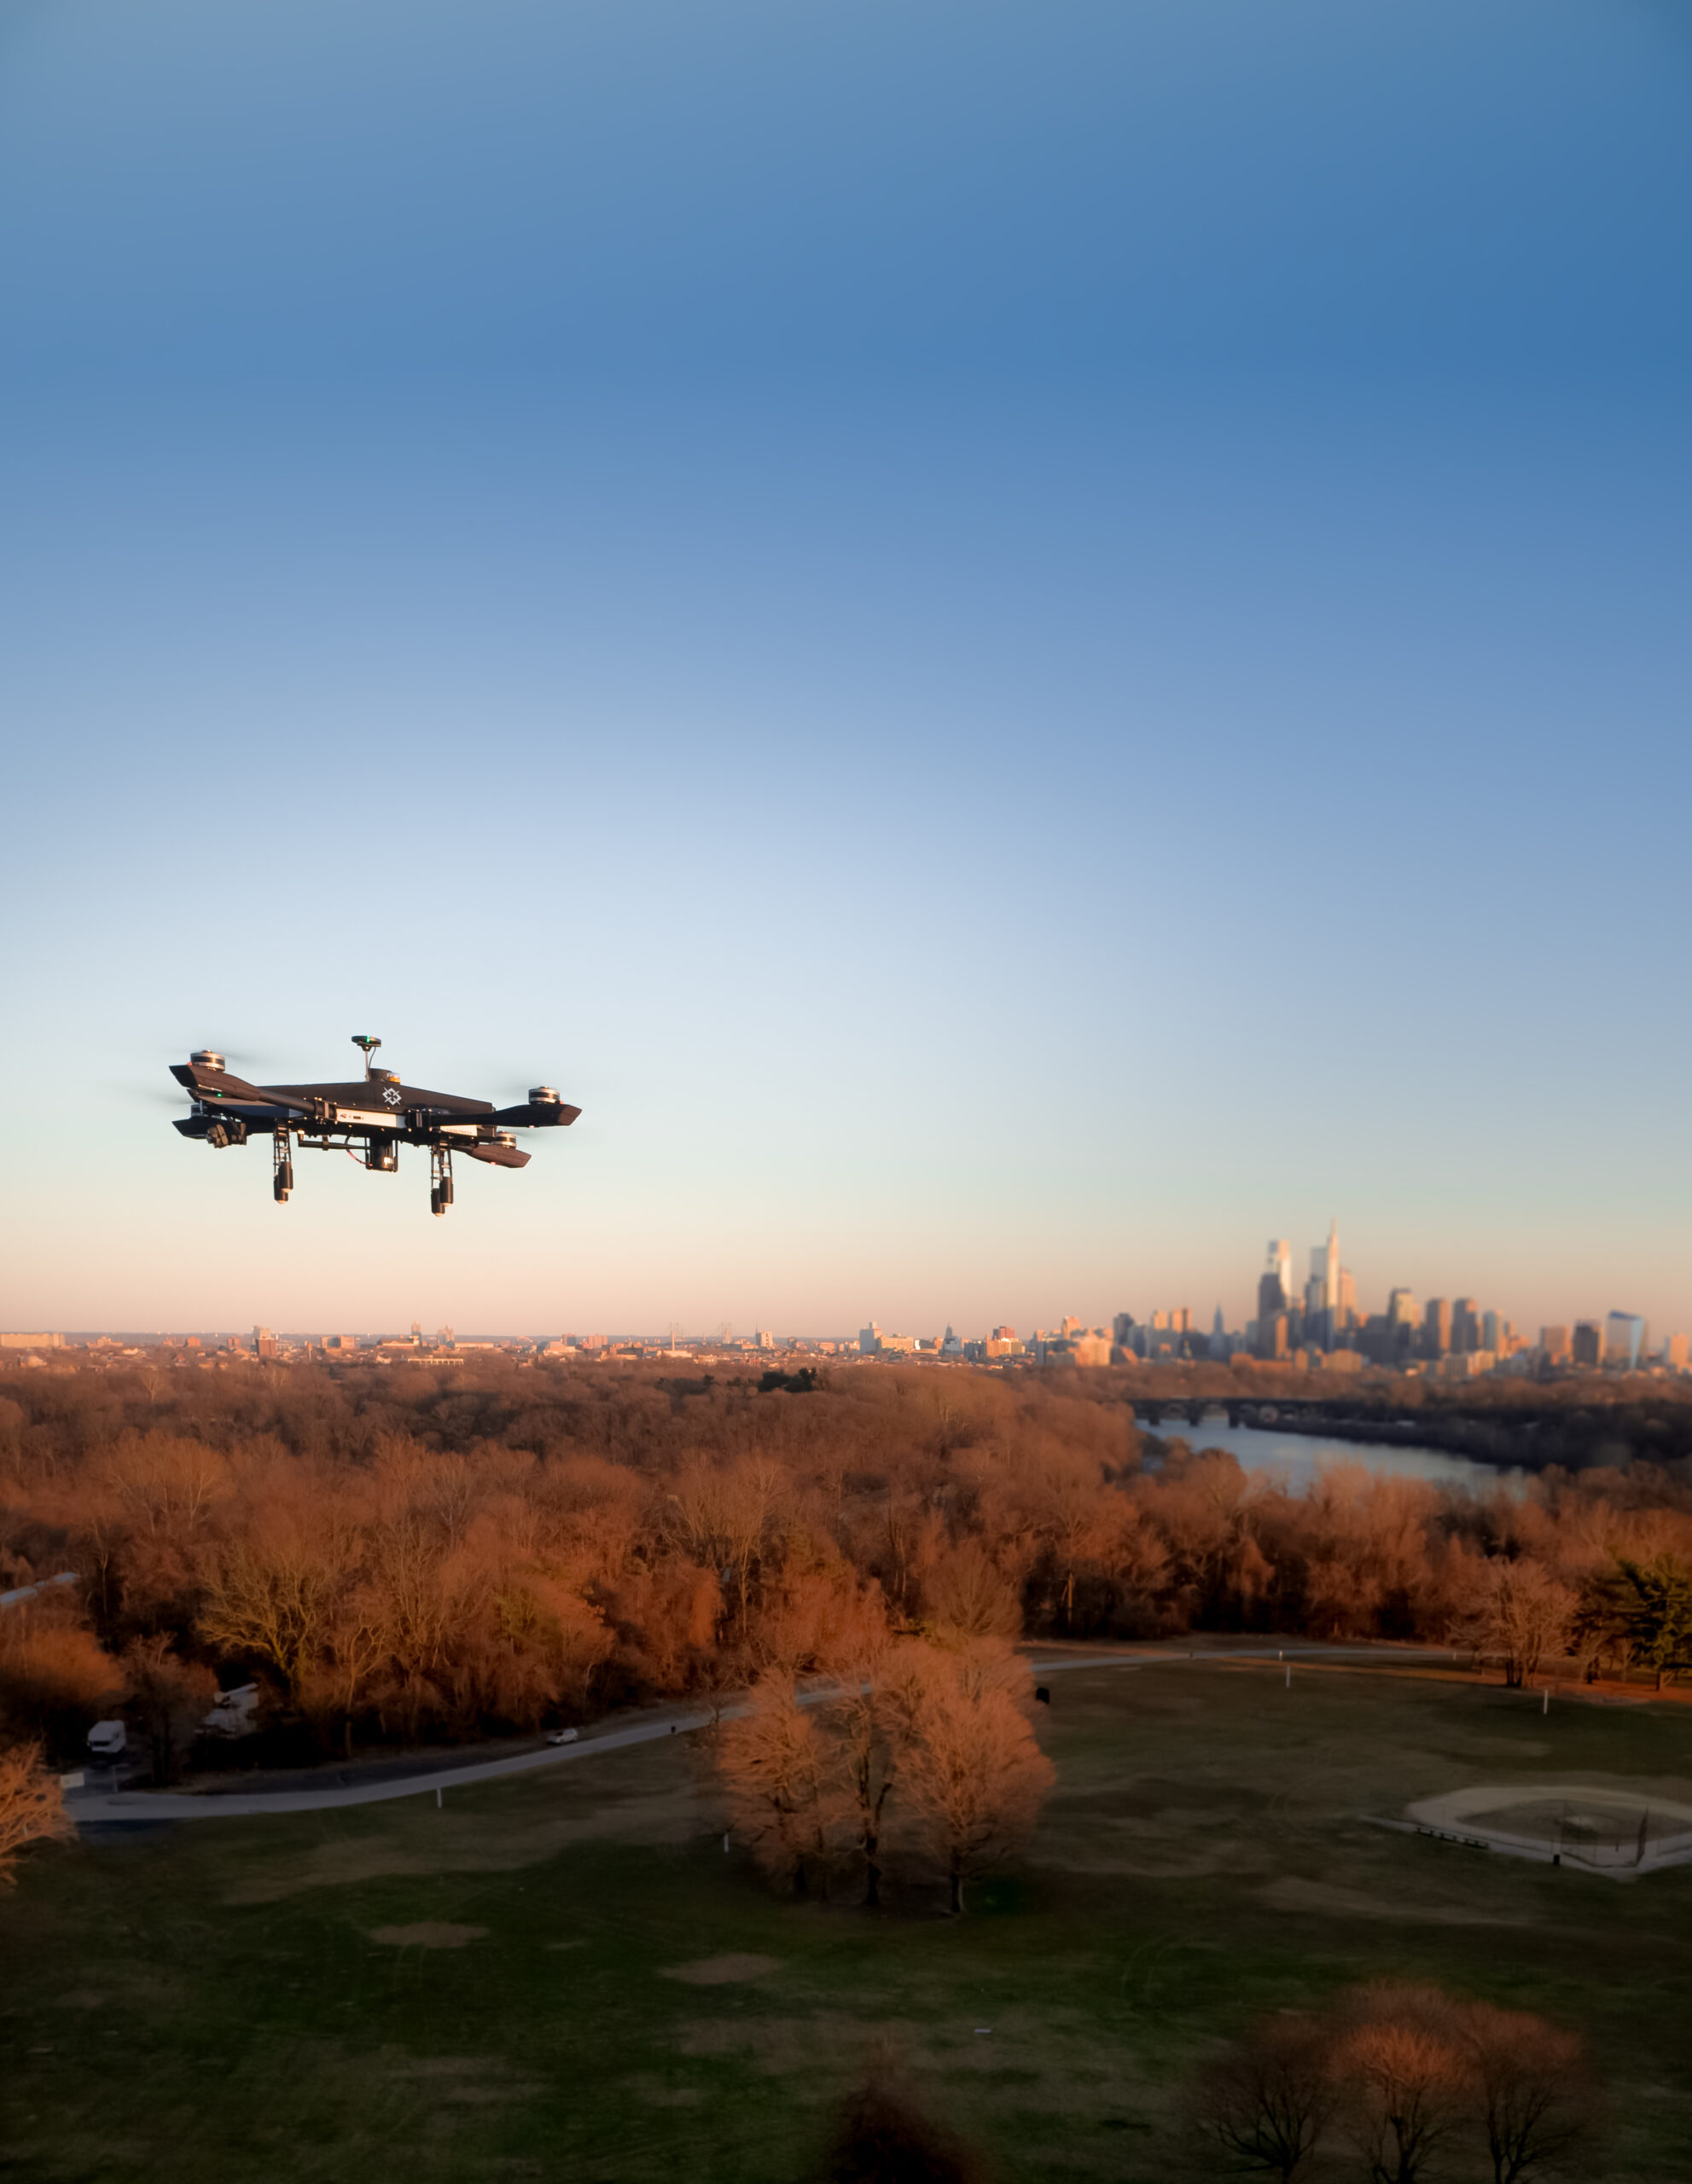 Asylon secutiy drone flies and observes the horizon of a city.